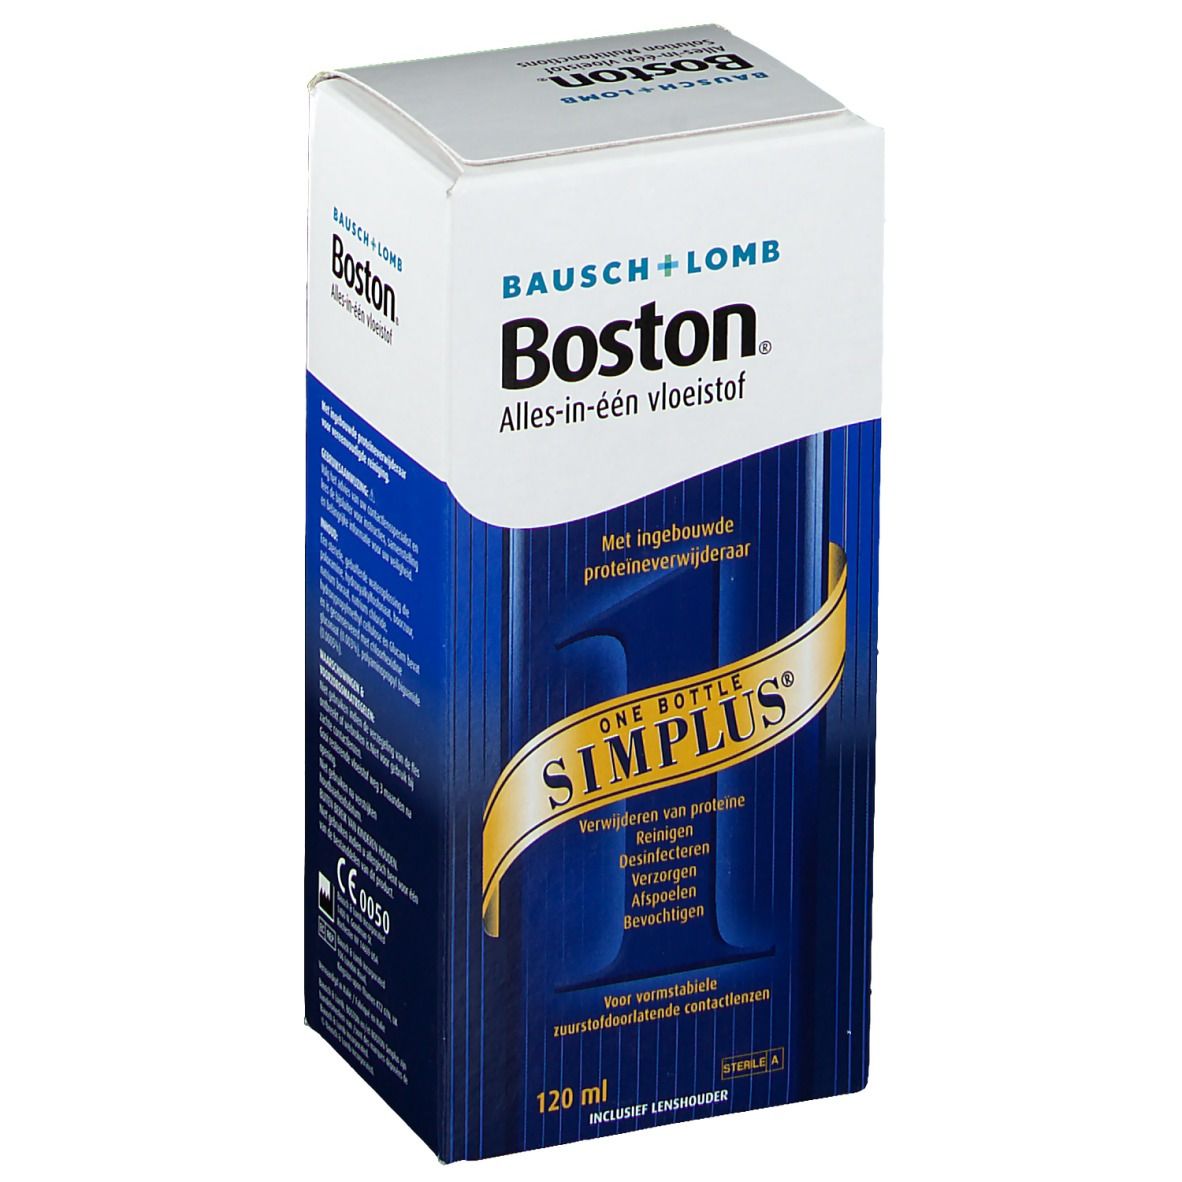 Boston Simplus® Solution Multifonctions